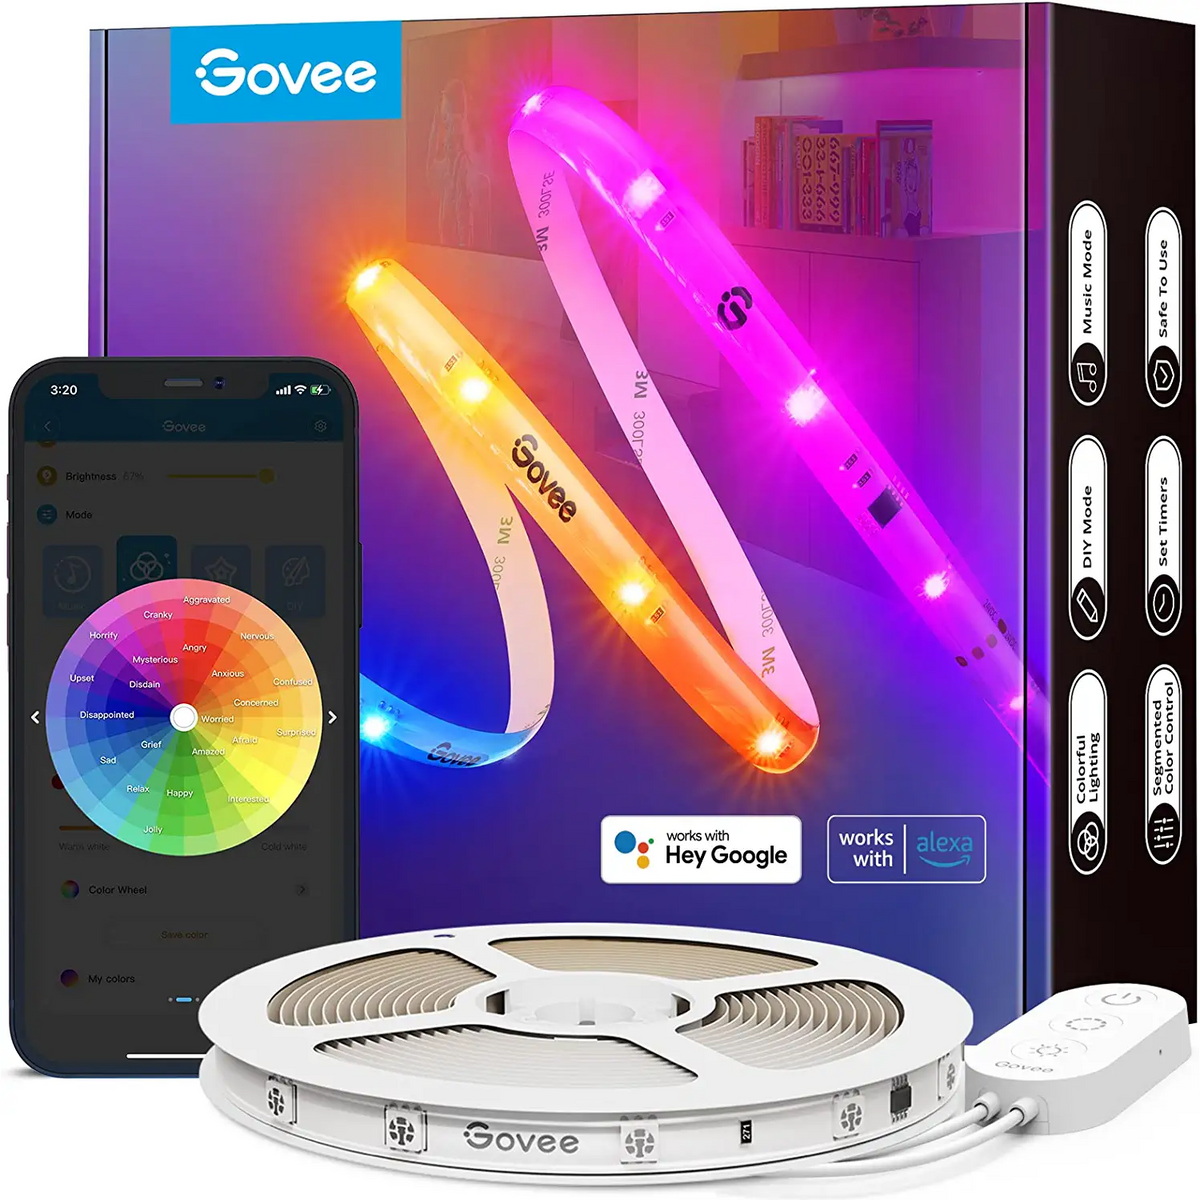 Govee RGB Classic Tira Led WiFi compatible con Alexa y Google – TecnoMarket